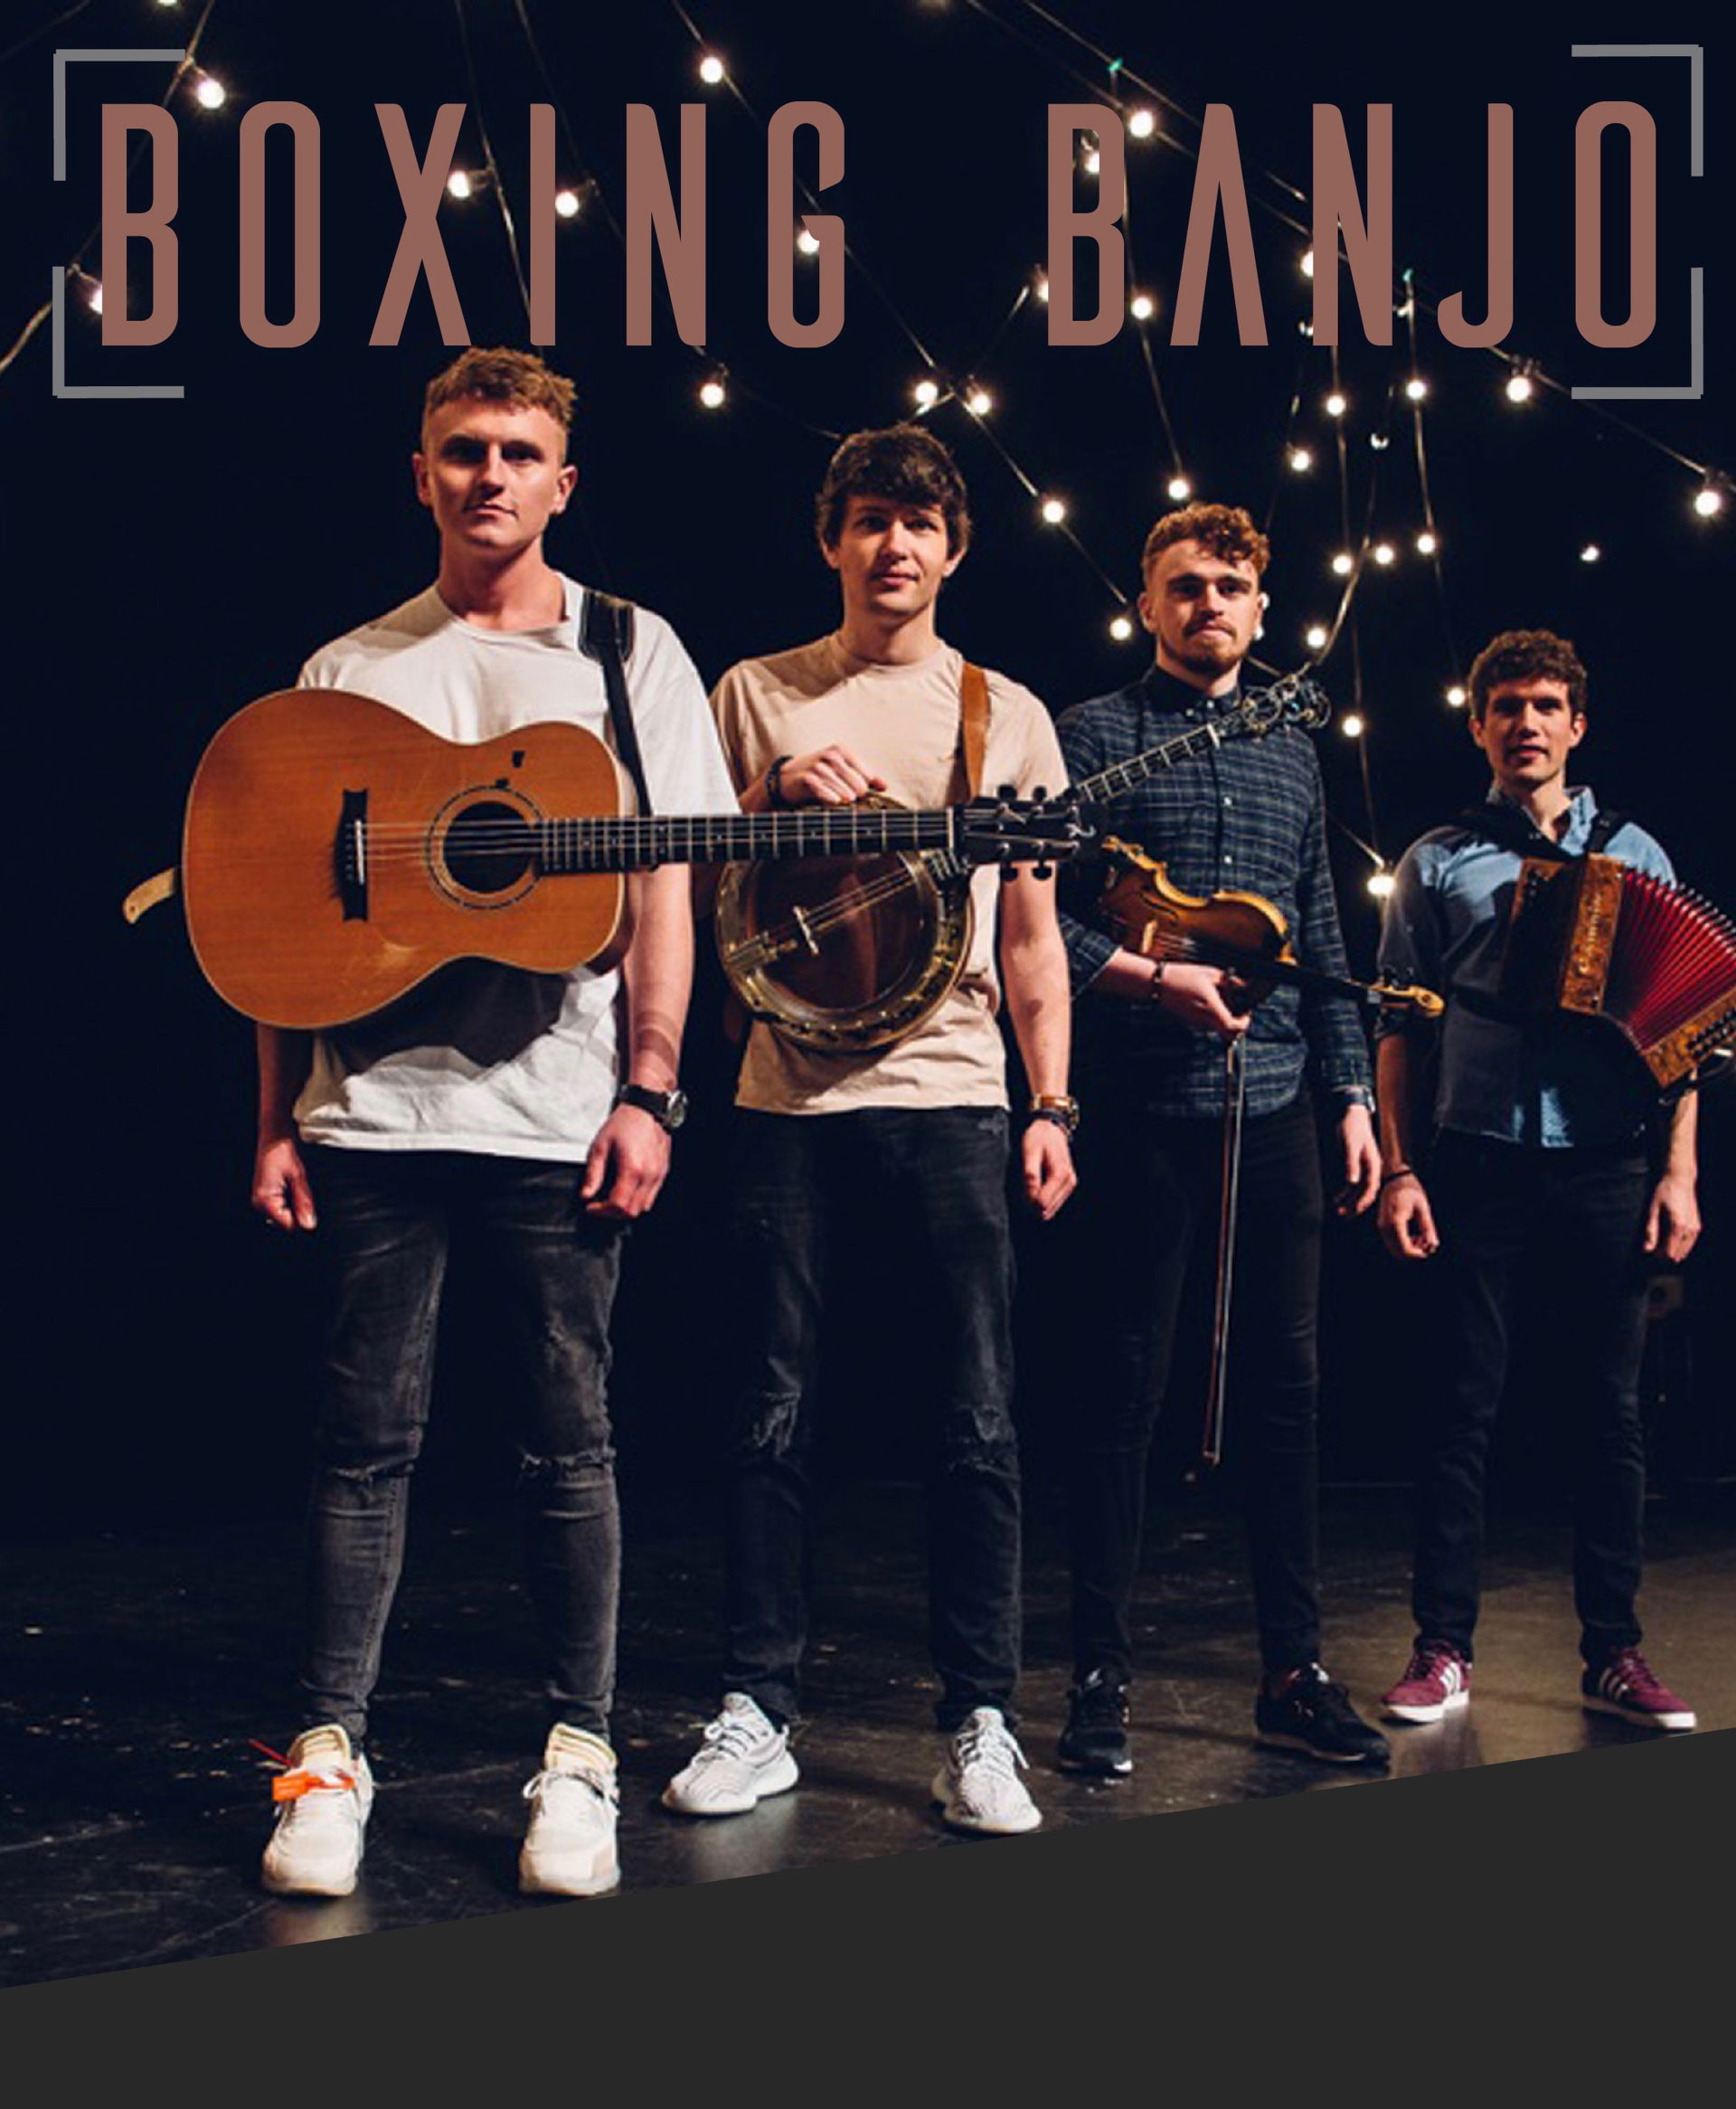 Boxing Banjo op Irish Festival 2021